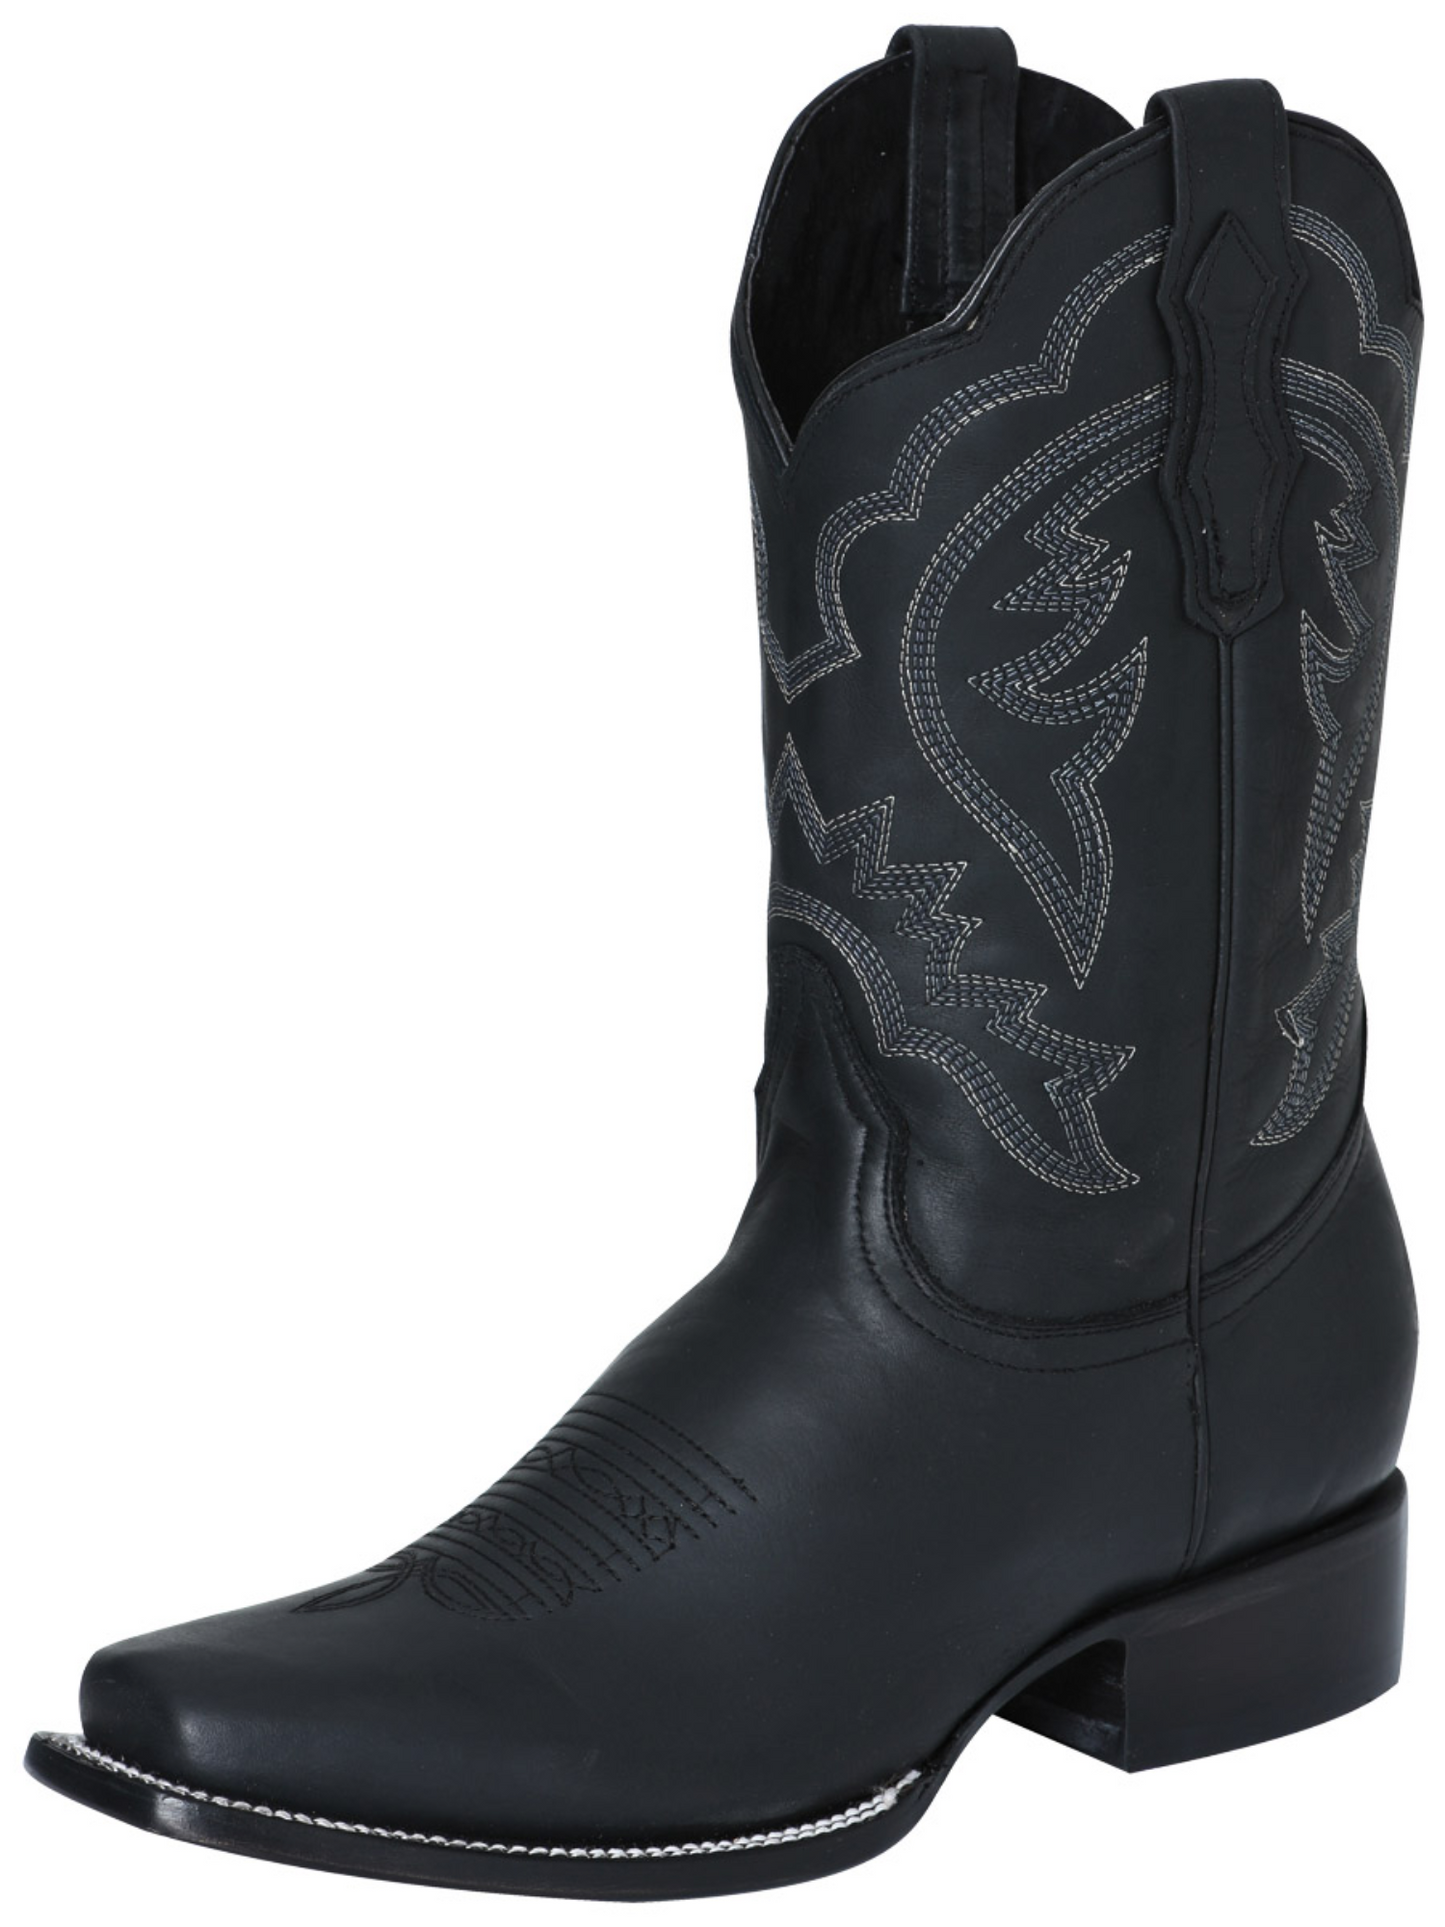 Classic Genuine Leather Rodeo Cowboy Boots for Men 'El Señor de los Cielos' - ID: 124066 Cowboy Boots El Señor de los Cielos Black